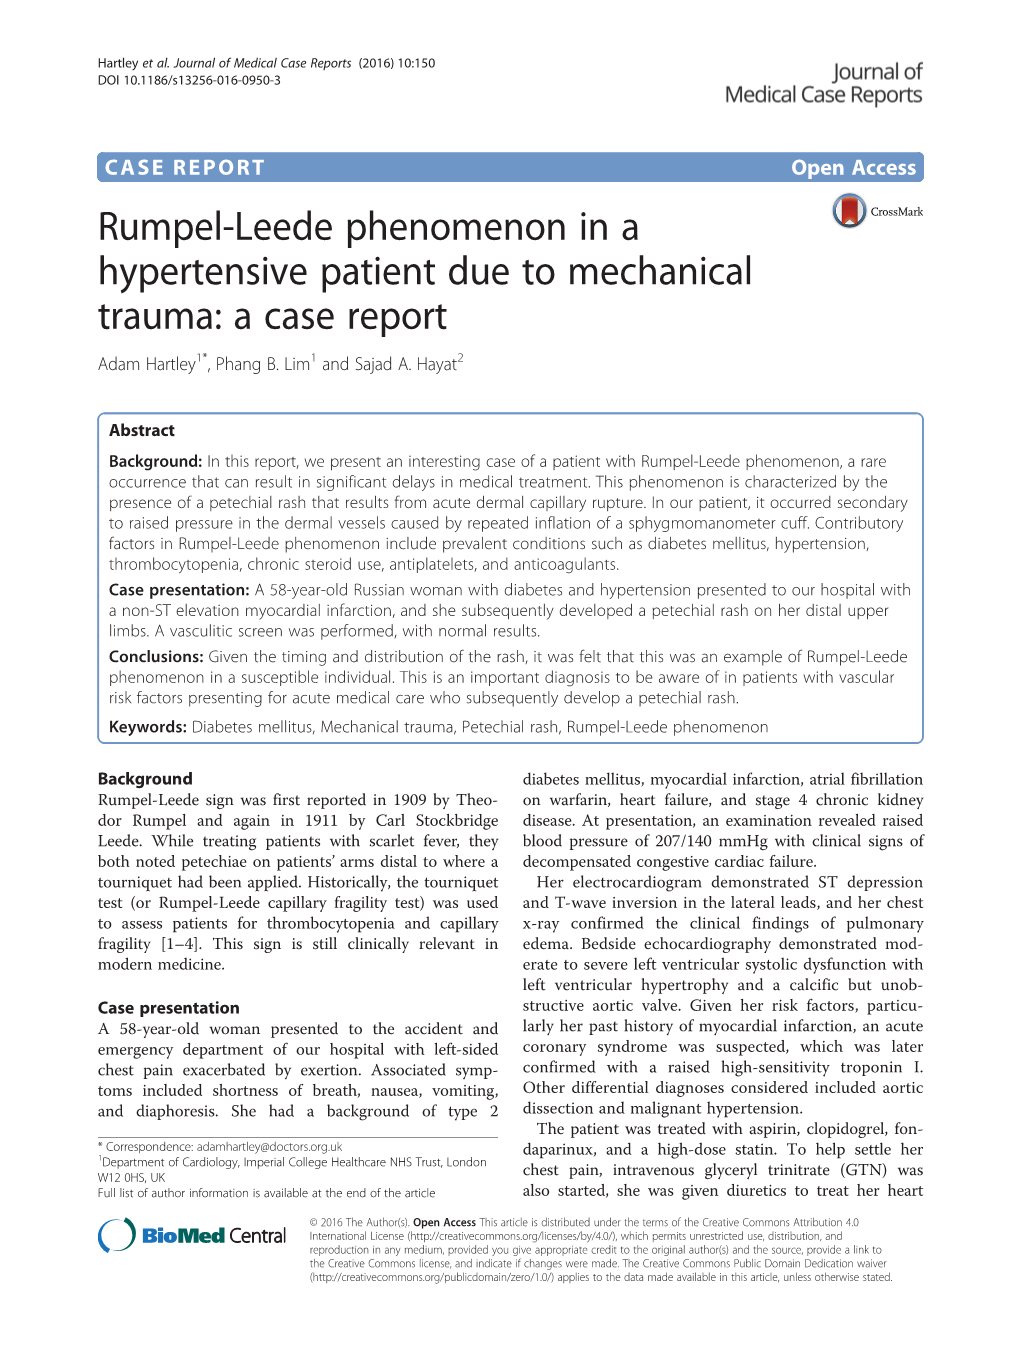 Rumpel-Leede Phenomenon in a Hypertensive Patient Due to Mechanical Trauma: a Case Report Adam Hartley1*, Phang B